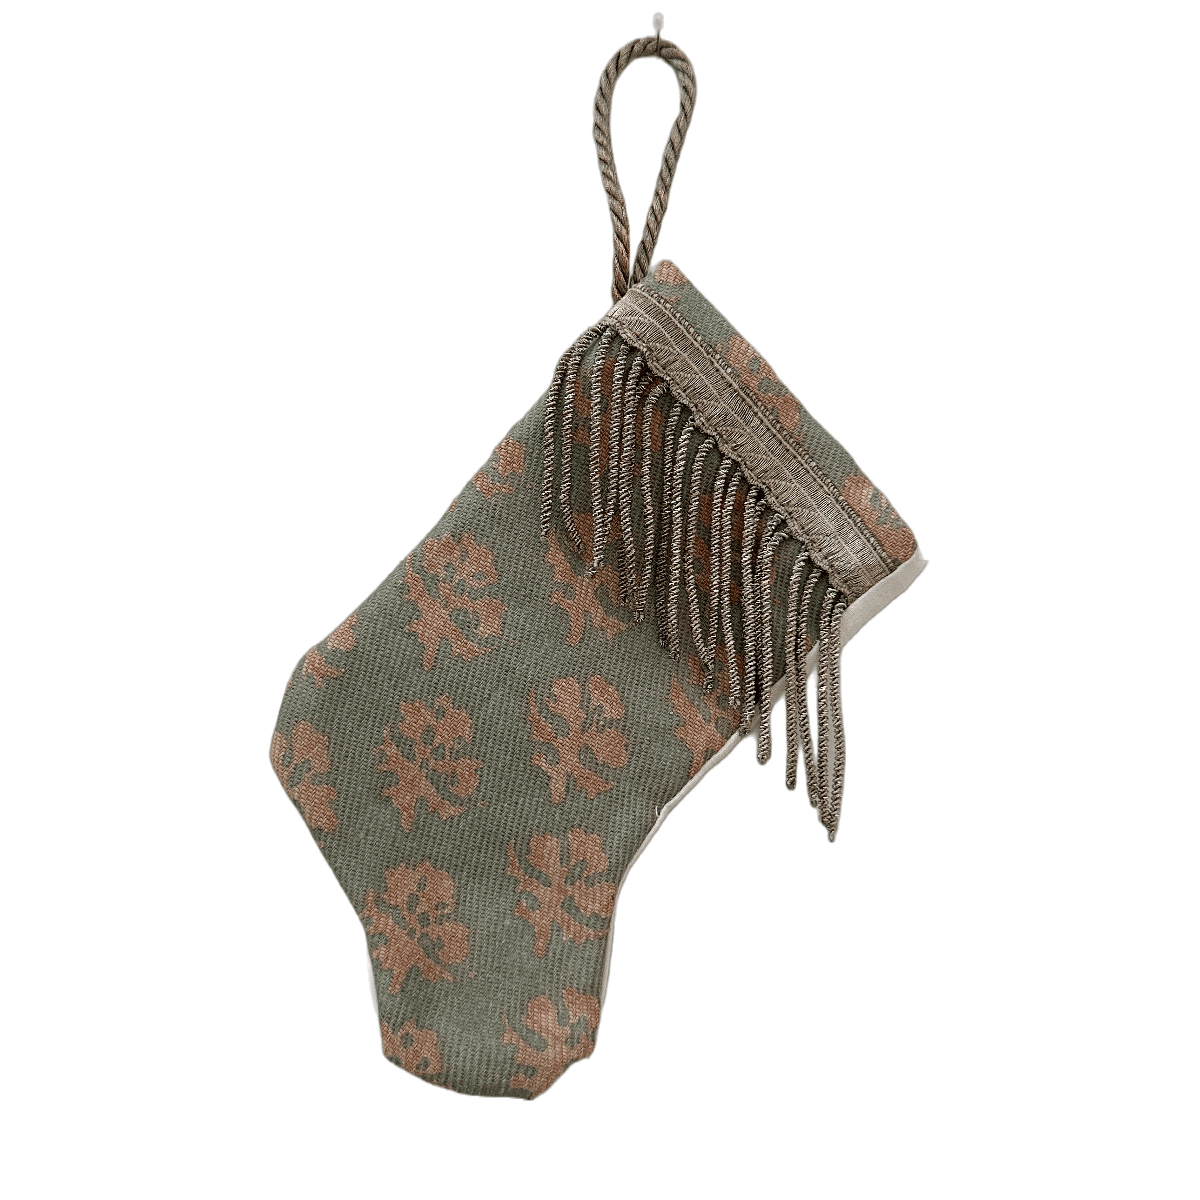 Handmade Mini Stocking Ornament from Antique & Vintage Textiles, Trims | Mint Fortuny Ornament B. Viz Design C 